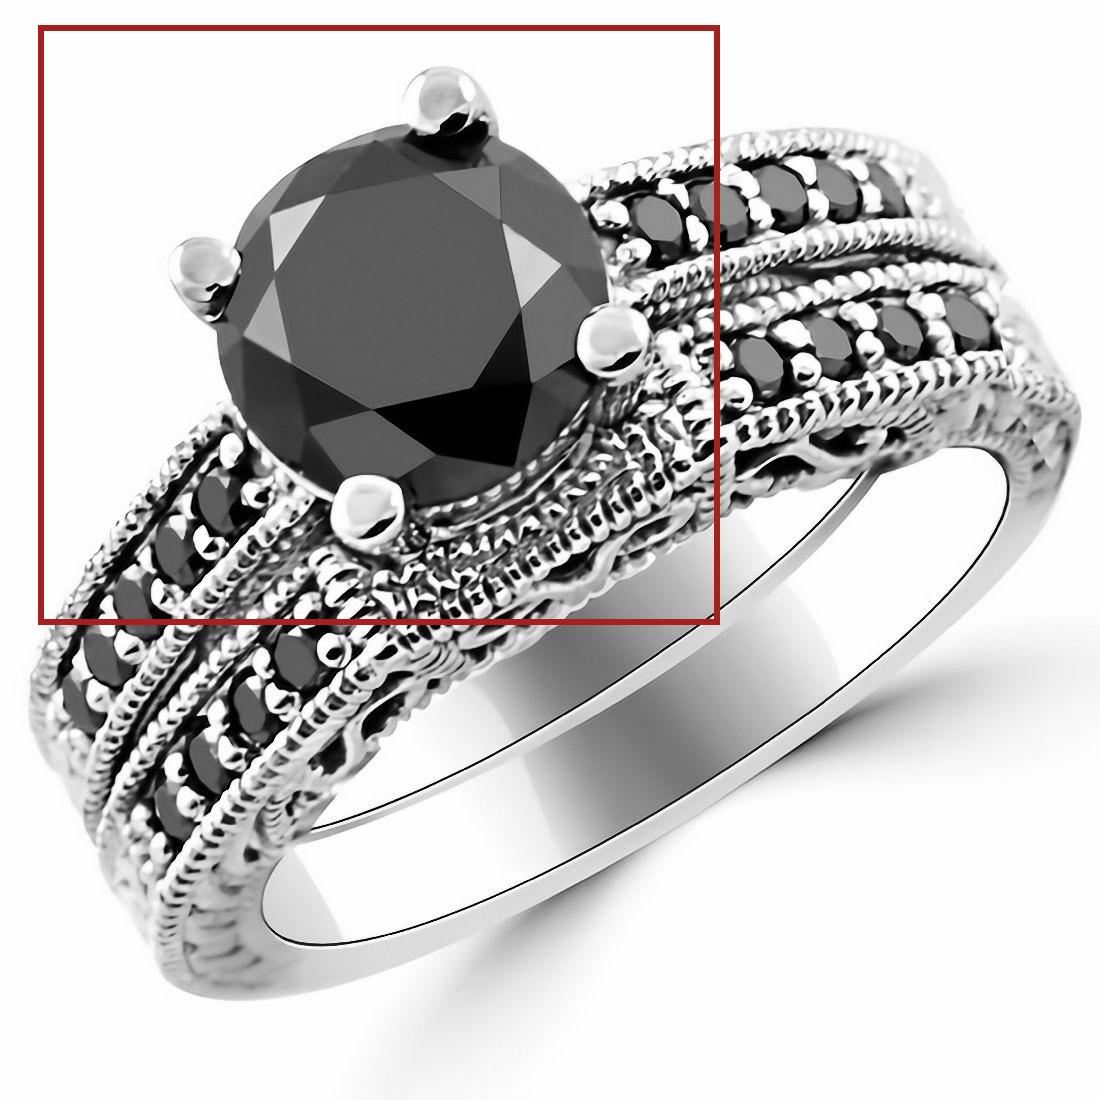 Best Black Diamond Engagement Rings In Canada